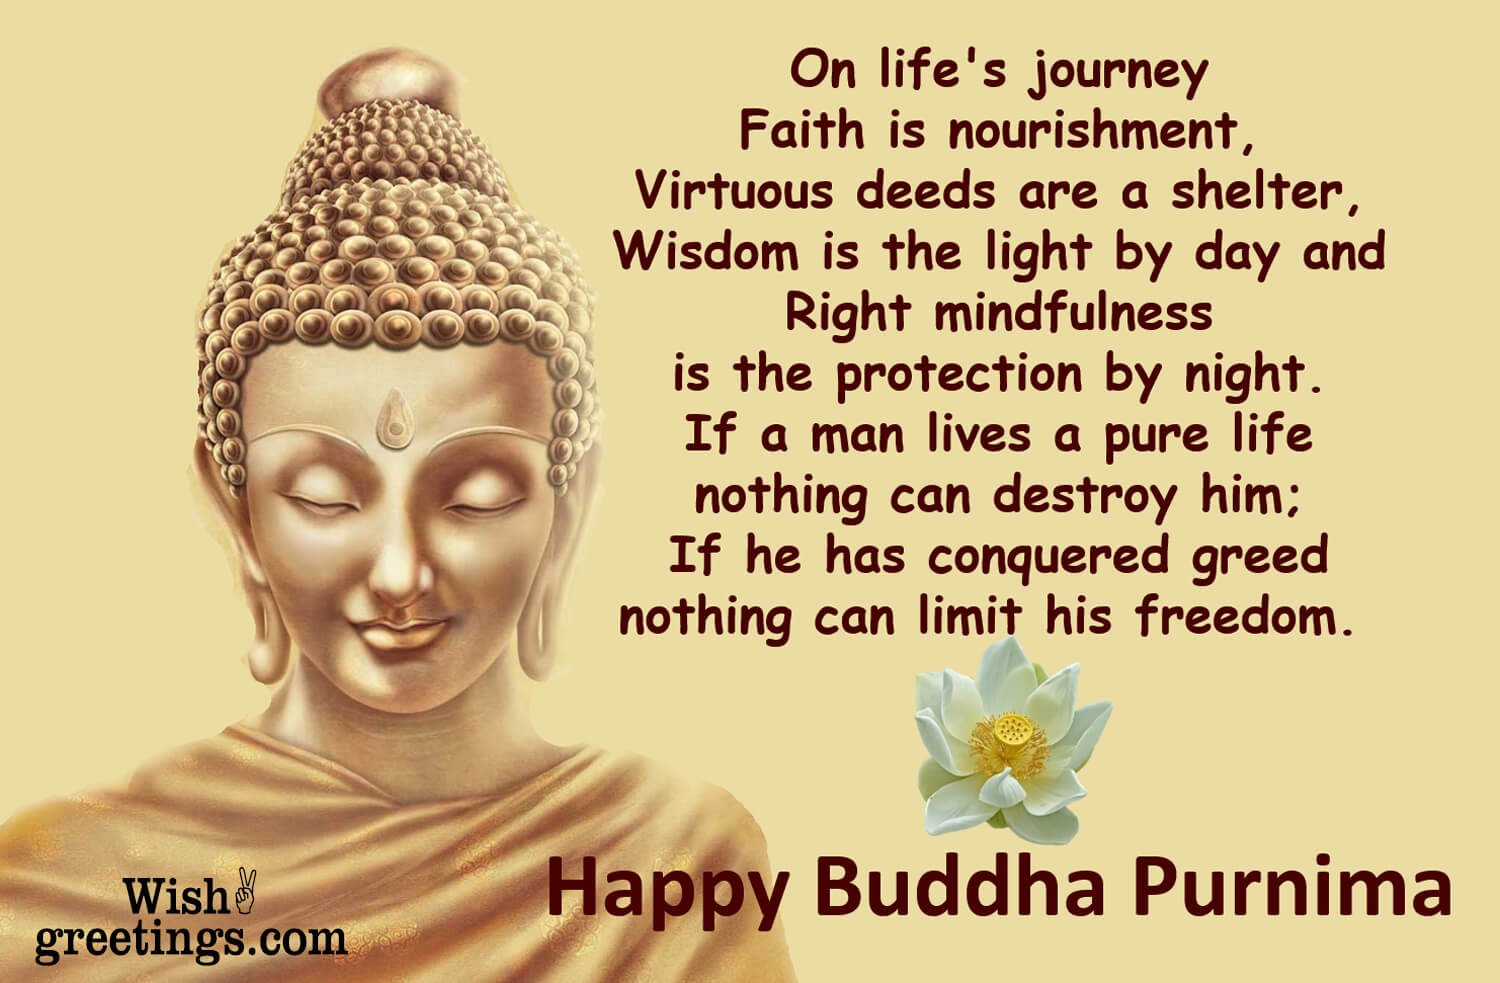 Happy Buddha Purnima Message